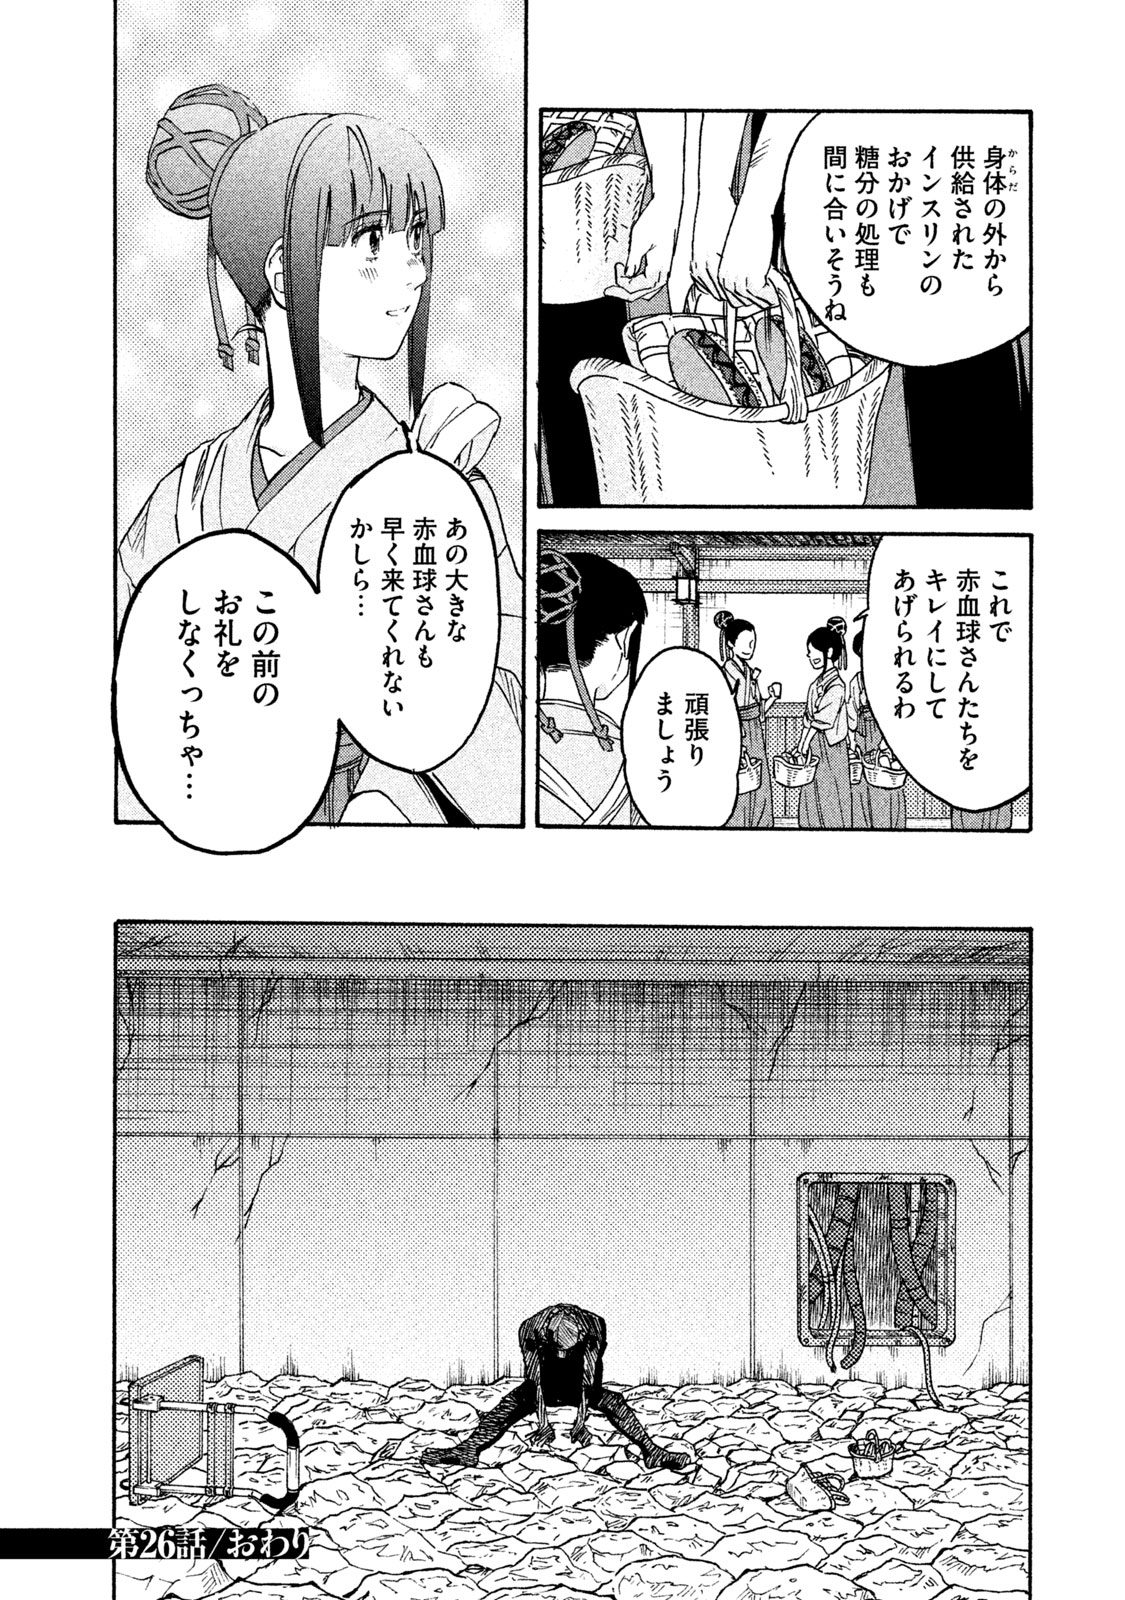 Hataraku Saibou BLACK - Chapter 26 - Page 20